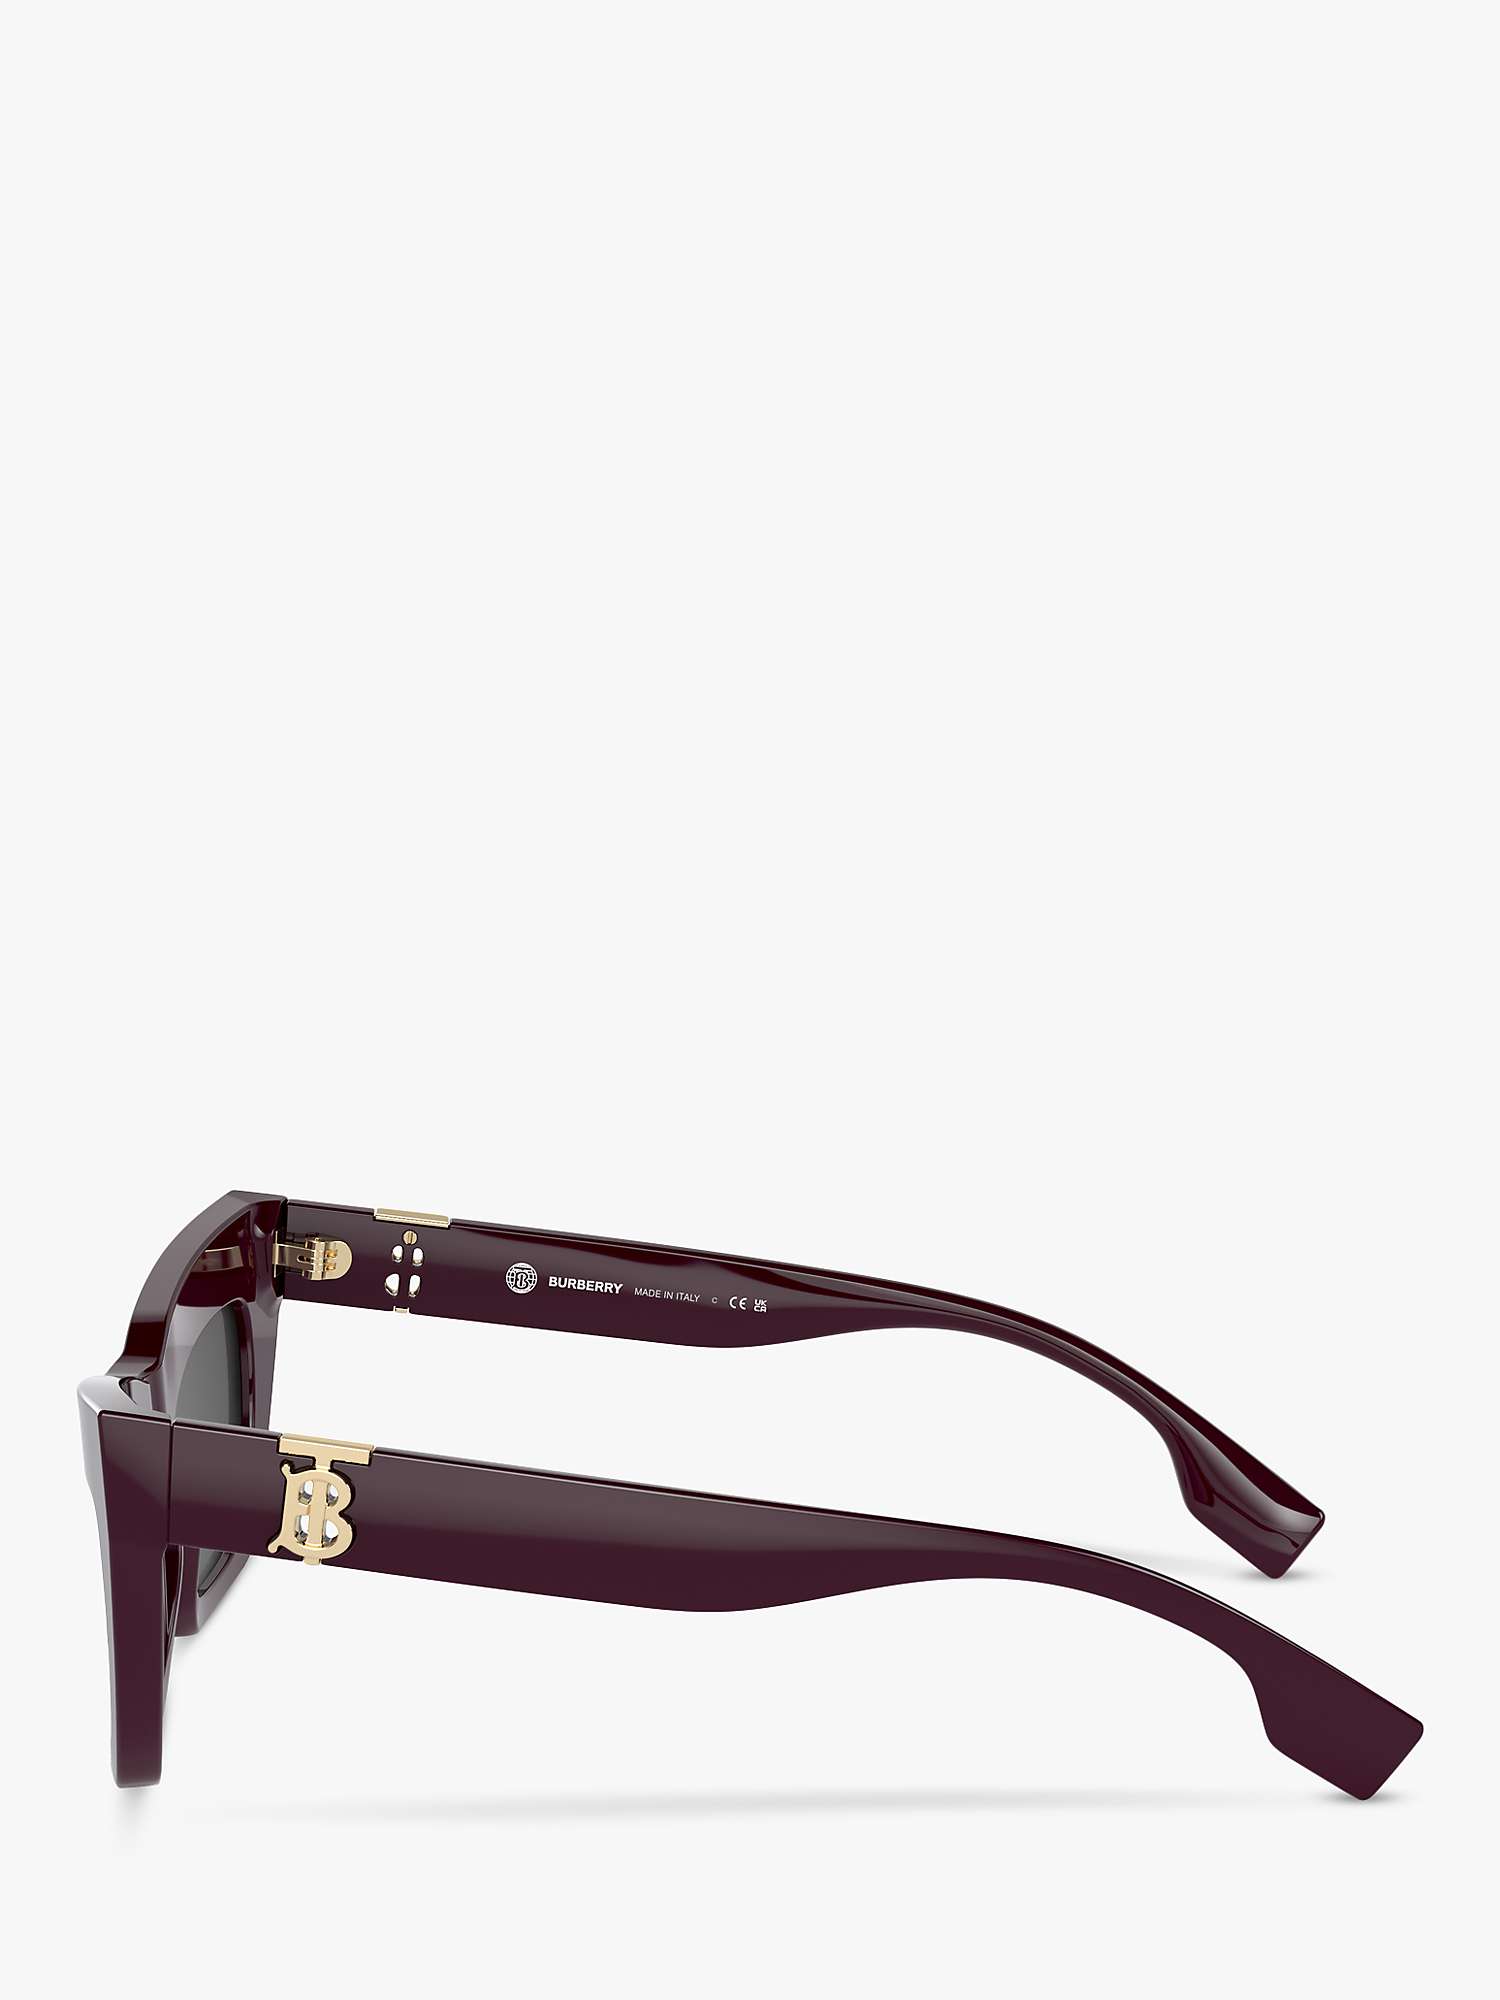 Buy Burberry BE4405 Women's Cat's Eye Sunglasses, Bordeaux/Grey Online at johnlewis.com